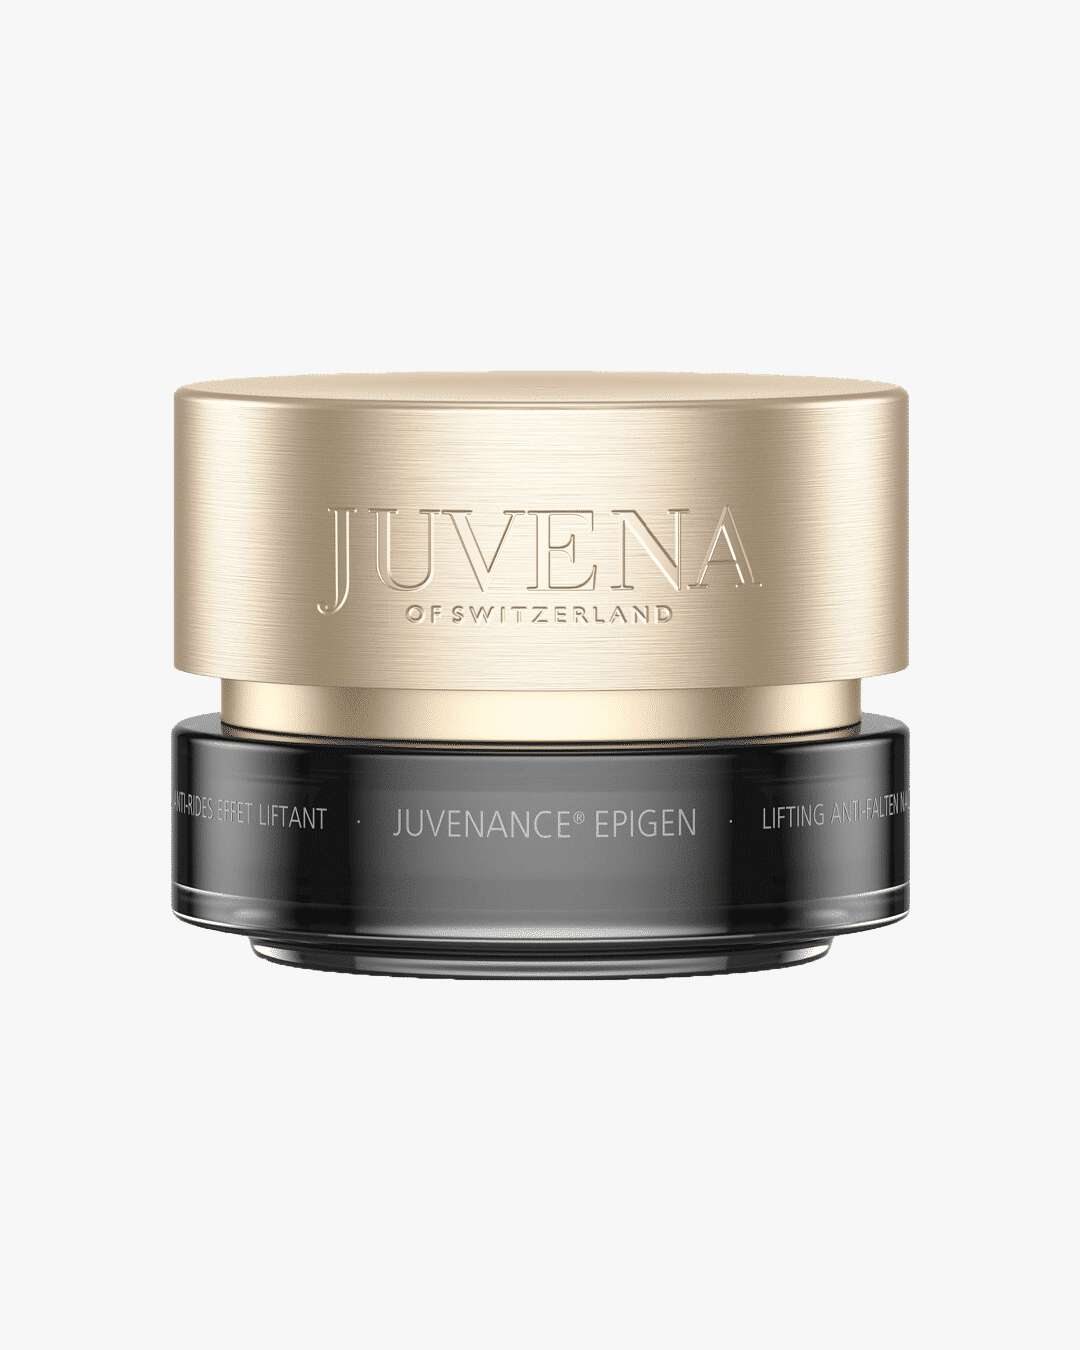 Juvenance Epigen Lifting Anti-Wrinkle Night Cream (Størrelse: 50 ML)